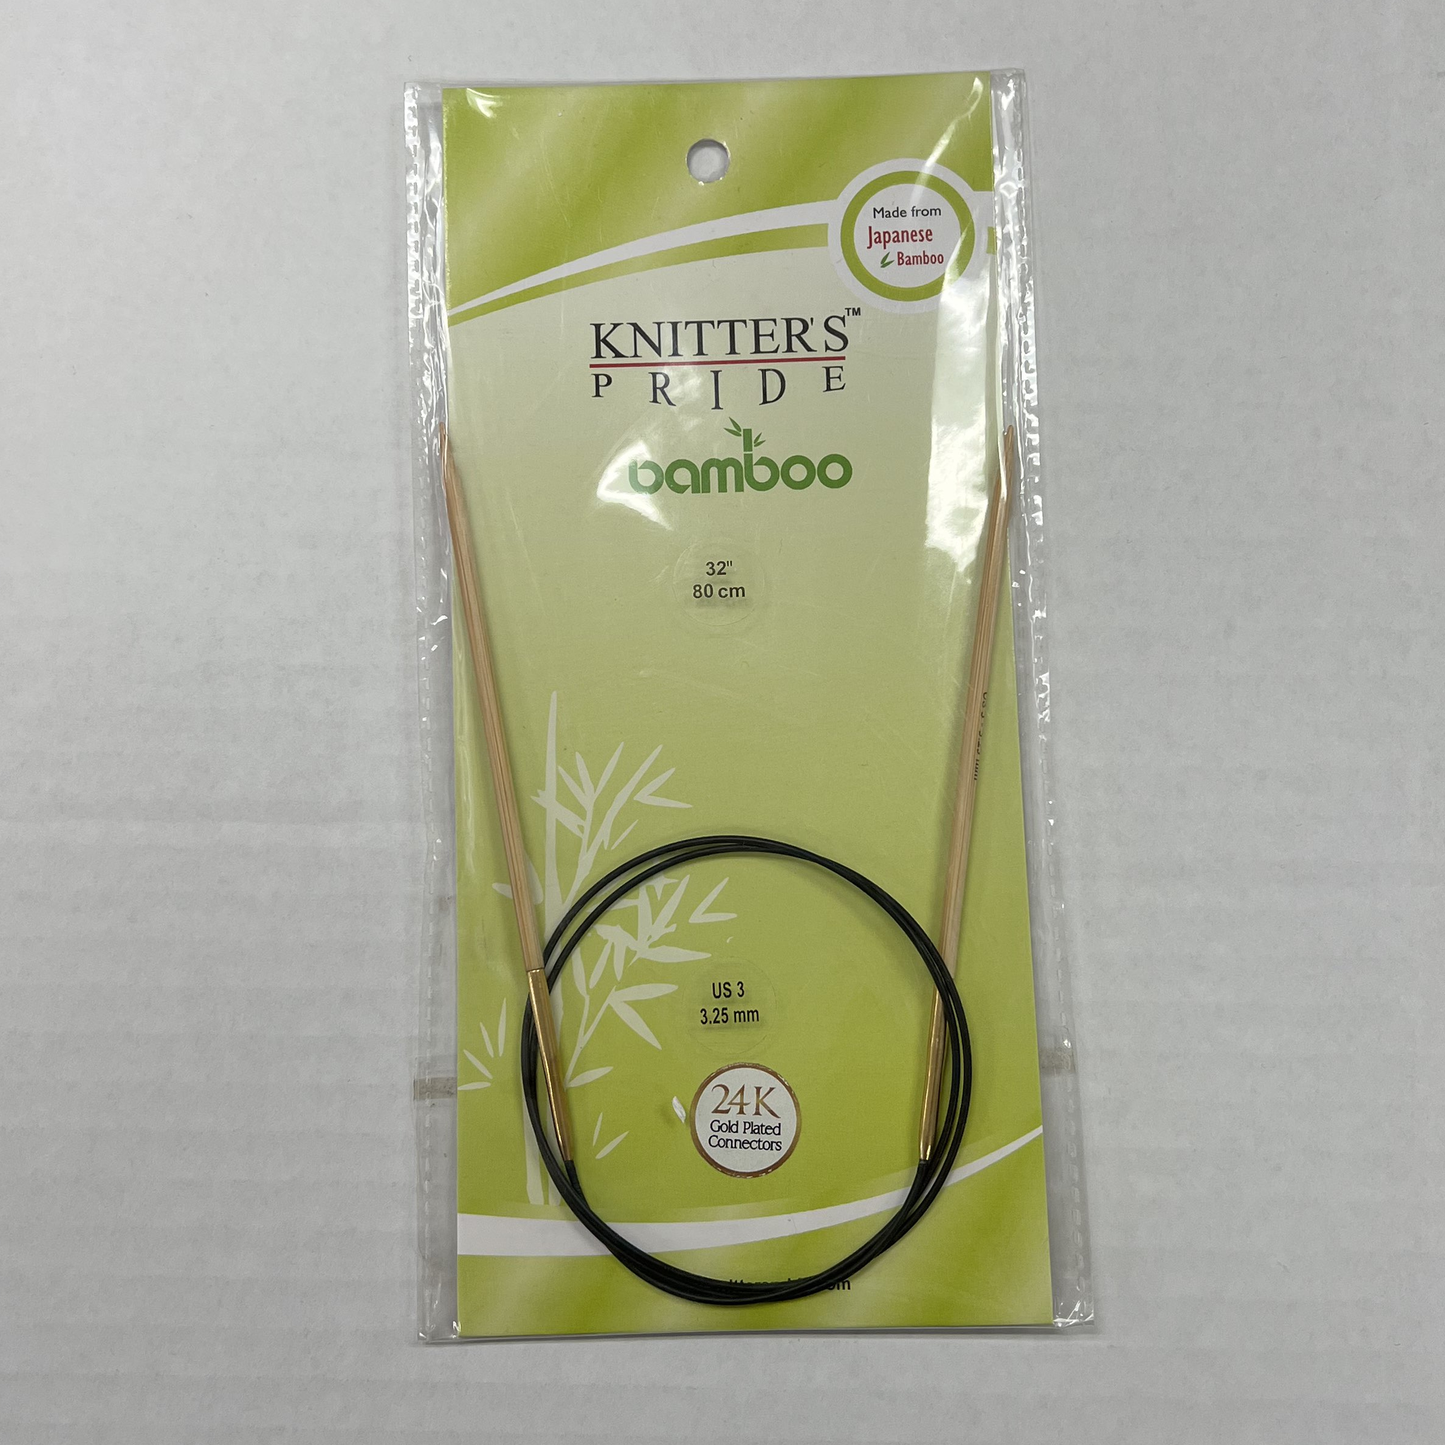 Knitter's Pride - Bamboo - US 3 / 3.25mm Fixed Circular Needles